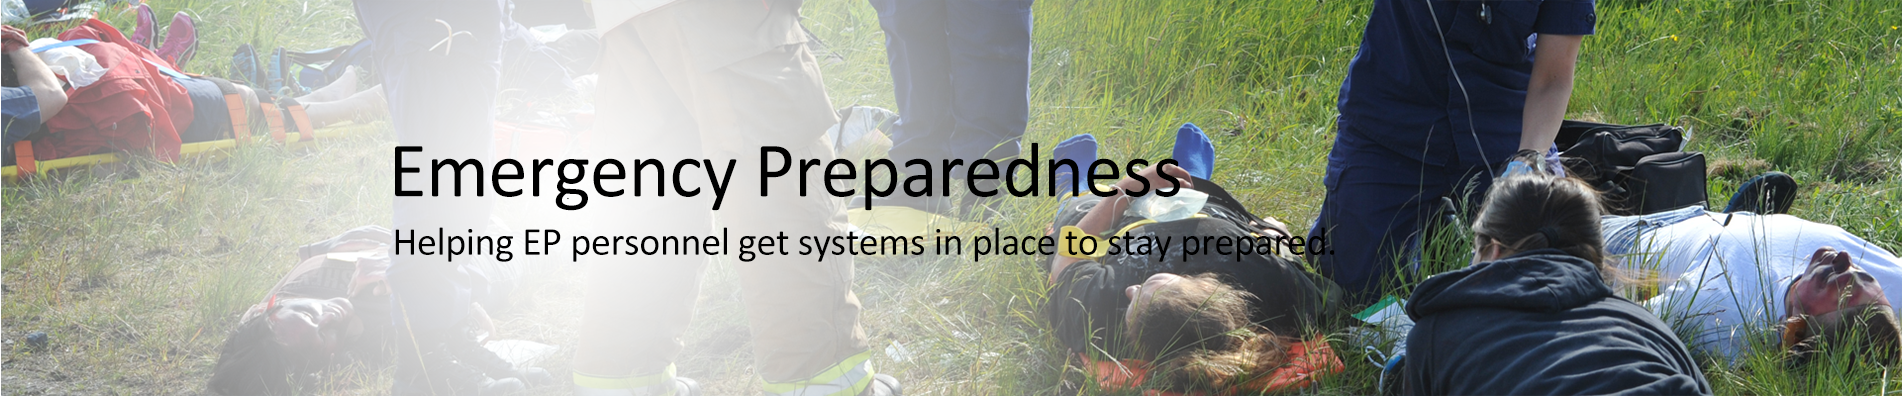 Emergency Preparedness header